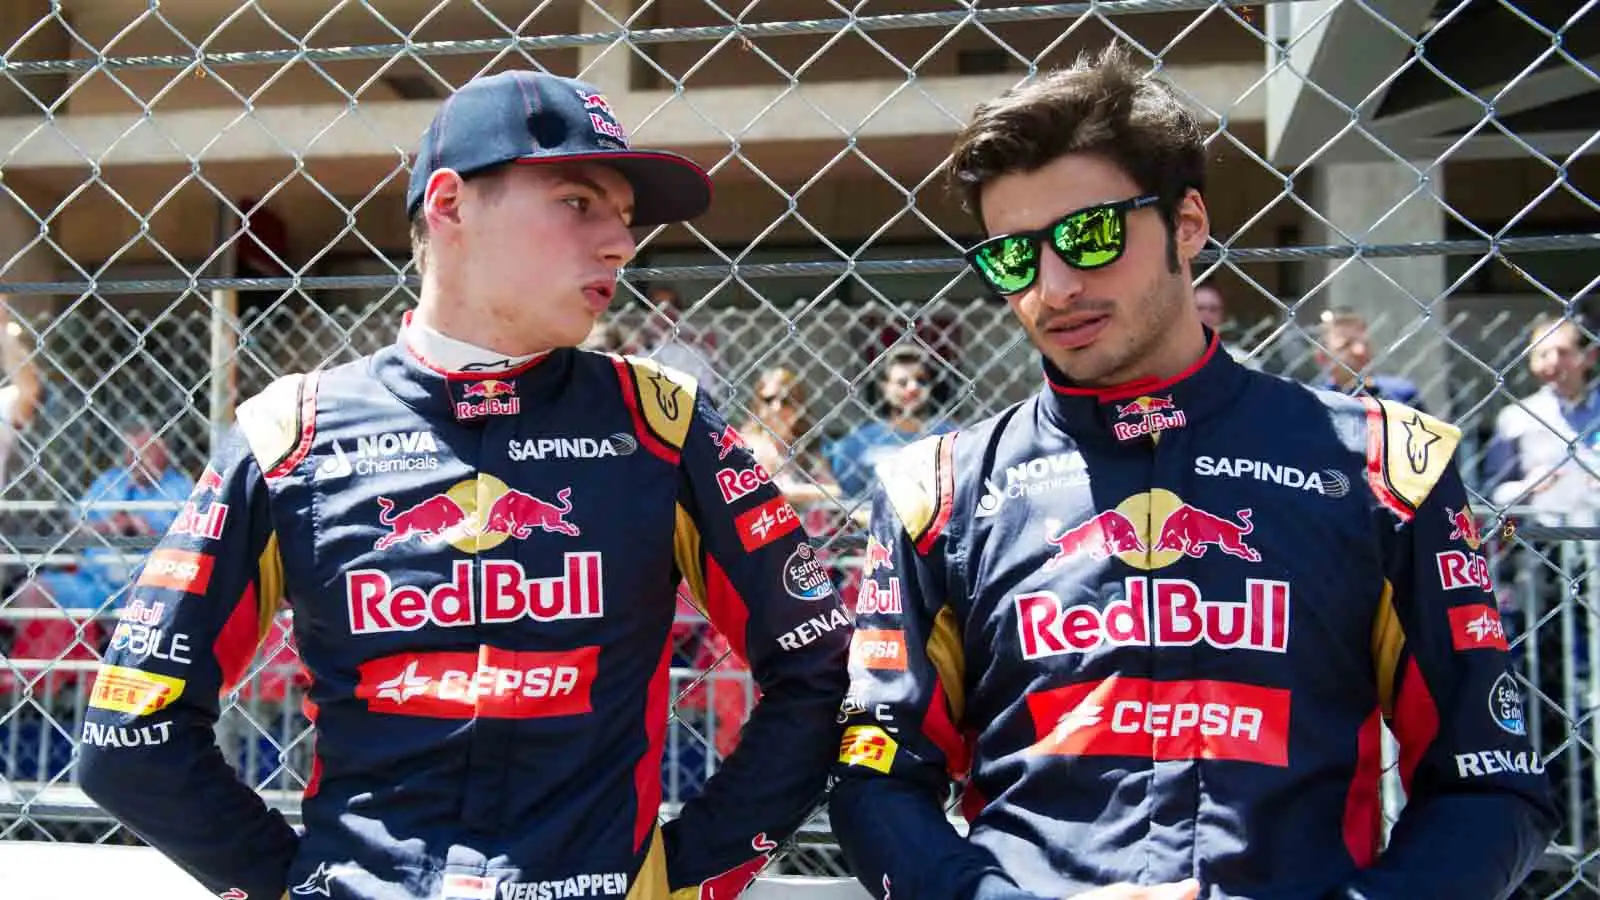 F1 rookie pair Max Verstappen and Carlos Sainz, Toro Rosso. Monaco May 2015.